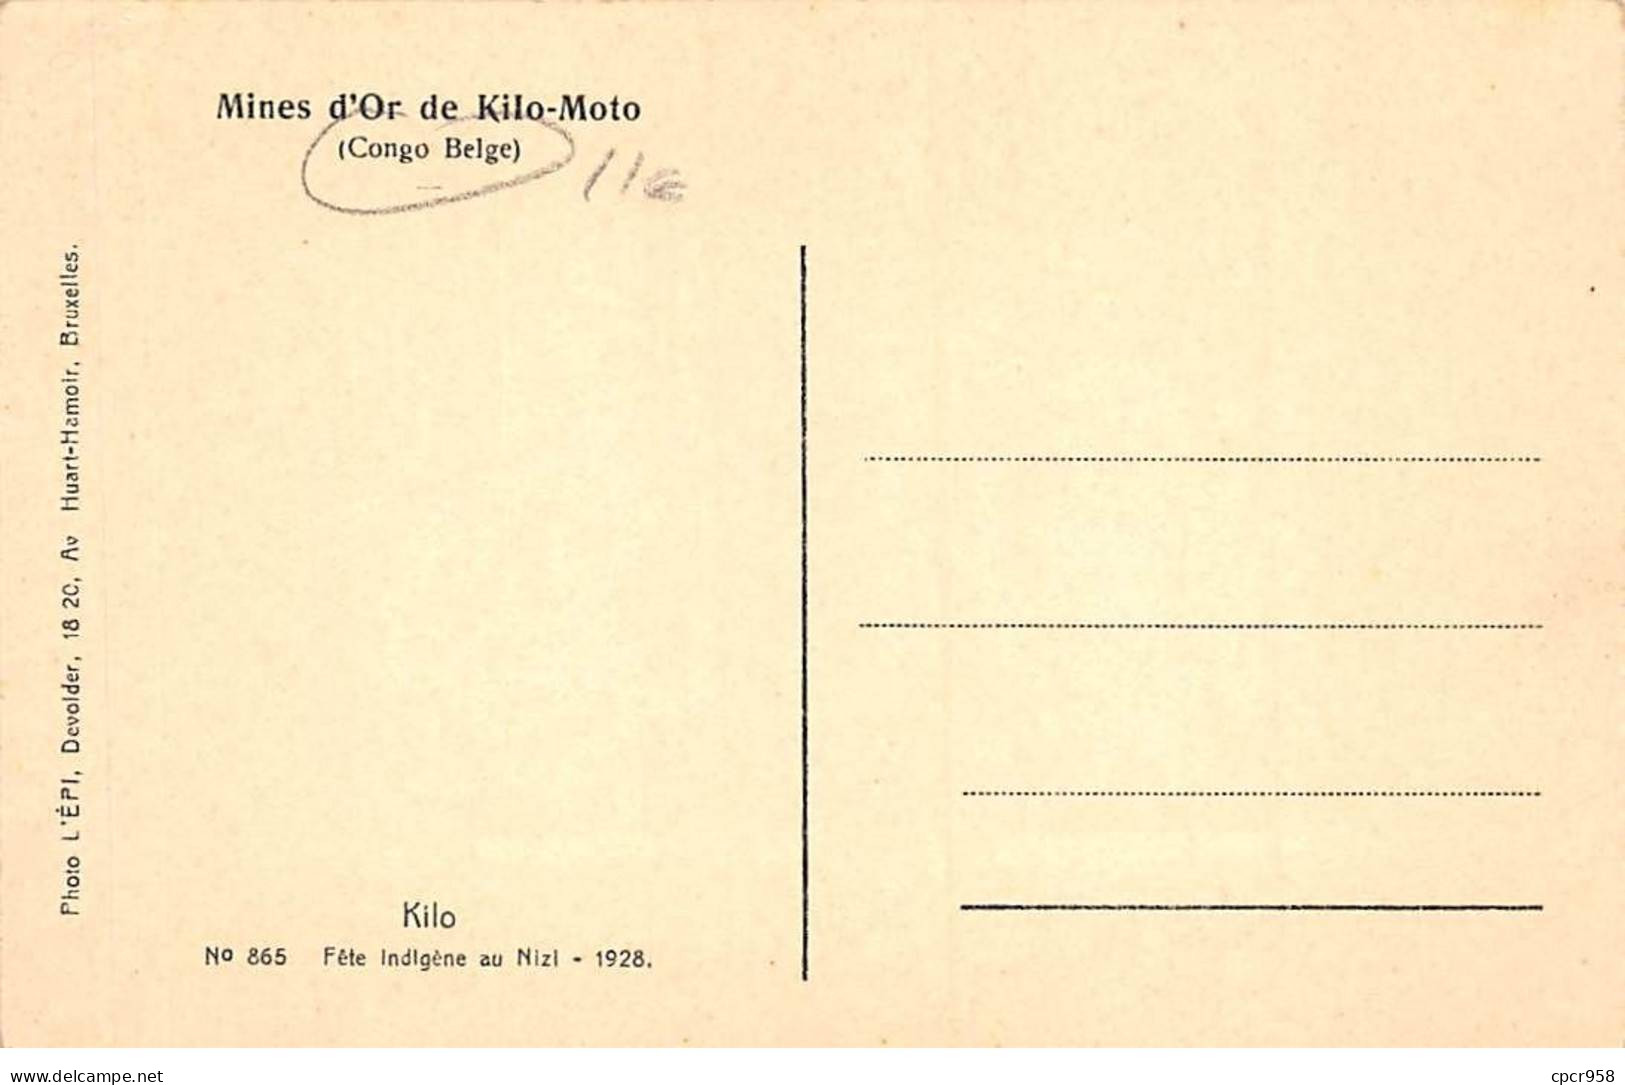 CONGO - SAN53905 - Mines D'or De Kilo Moto - Fête Indigène Au Nizi - 1928 - Belgian Congo